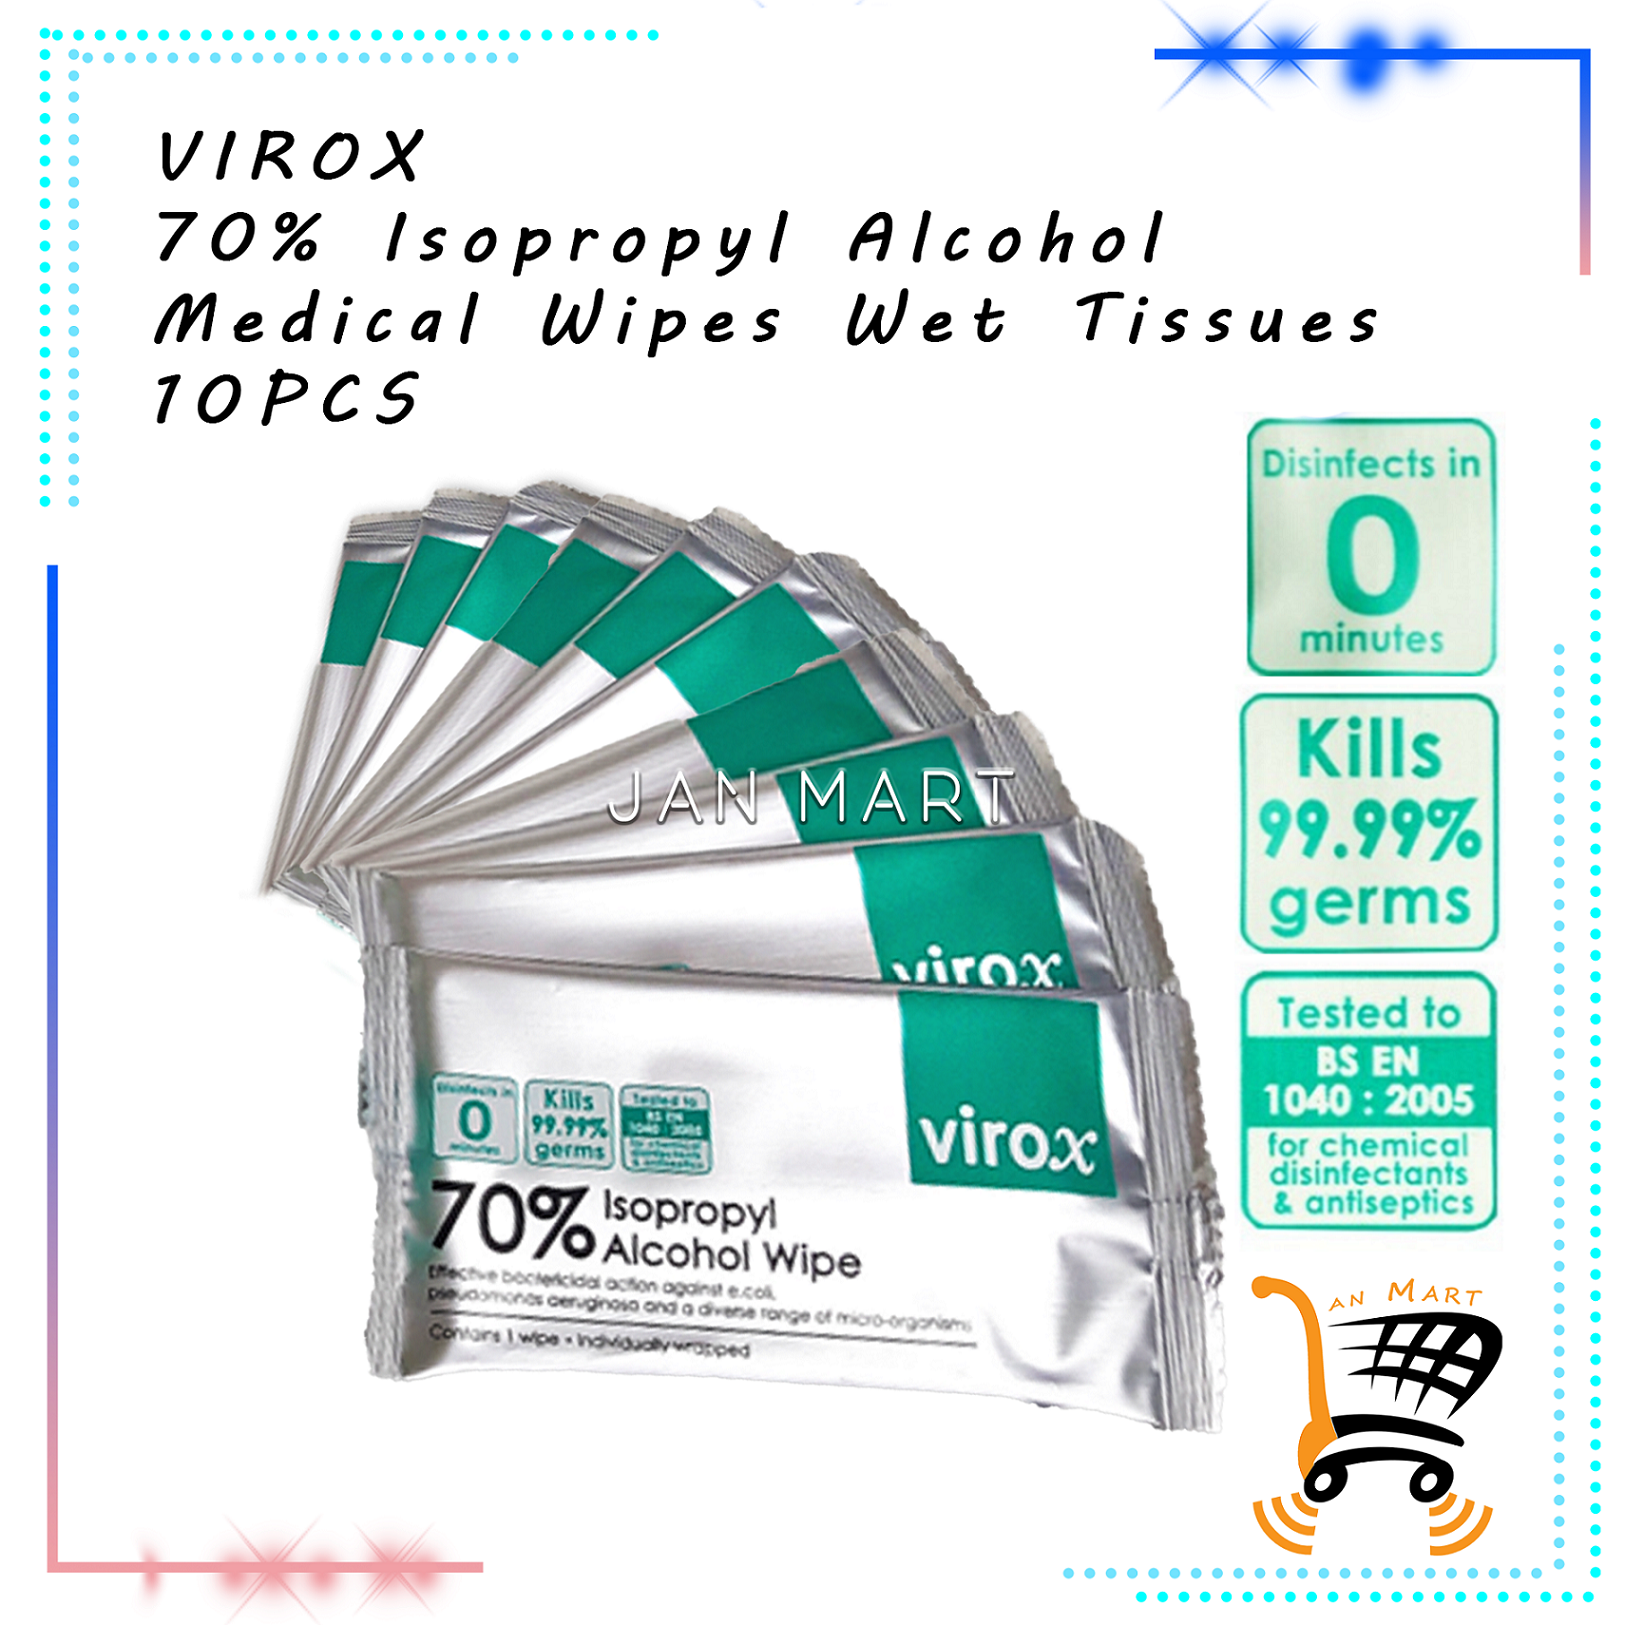 VIROX 70% Isopropyl Alcohol Medical Wipes Wet Tissues 10PCS